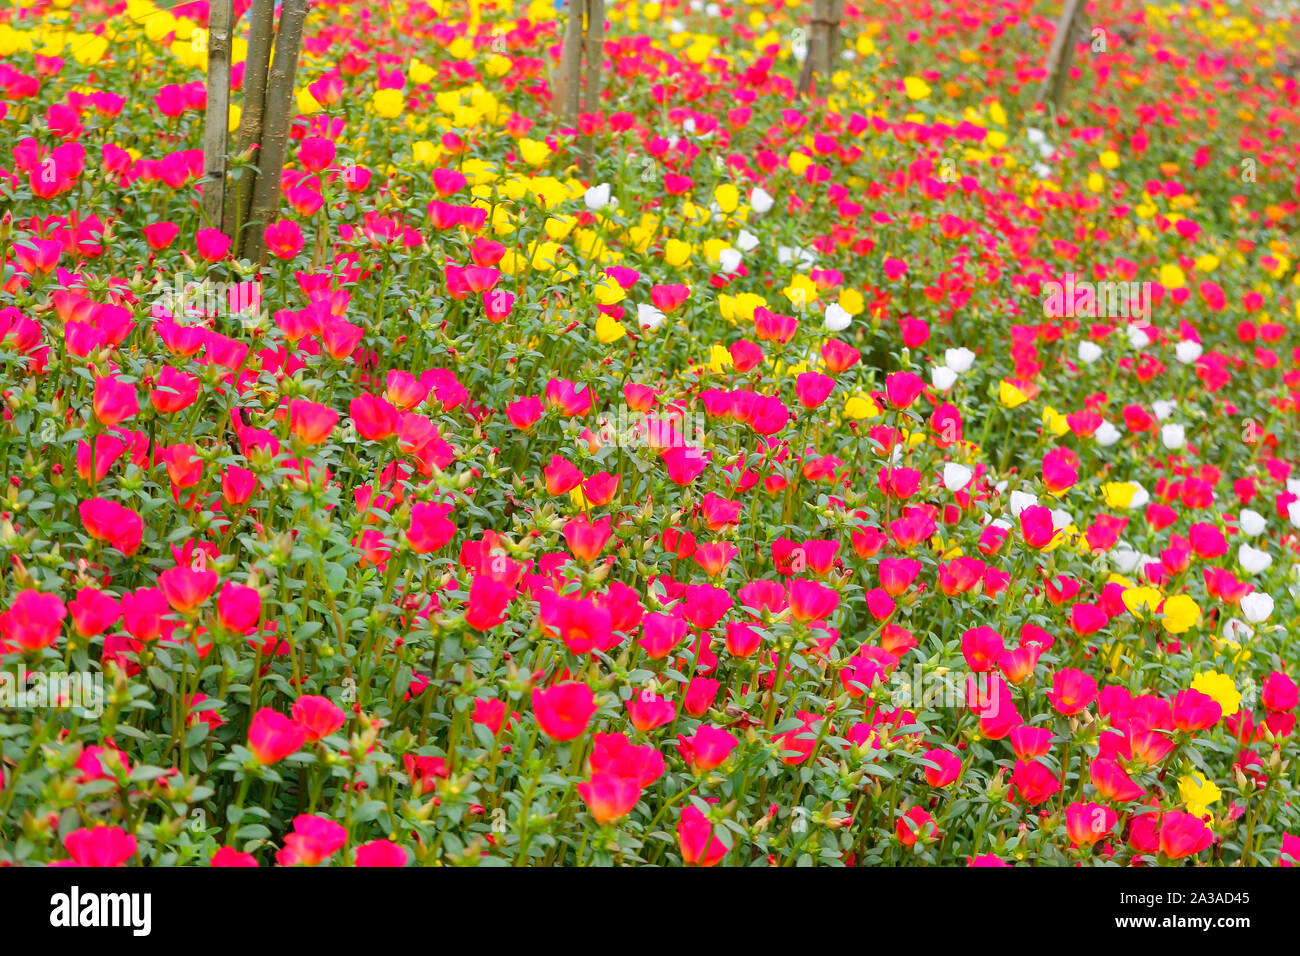 photo of colorful common purslane or verdolaga flower in the garden Stock Photo